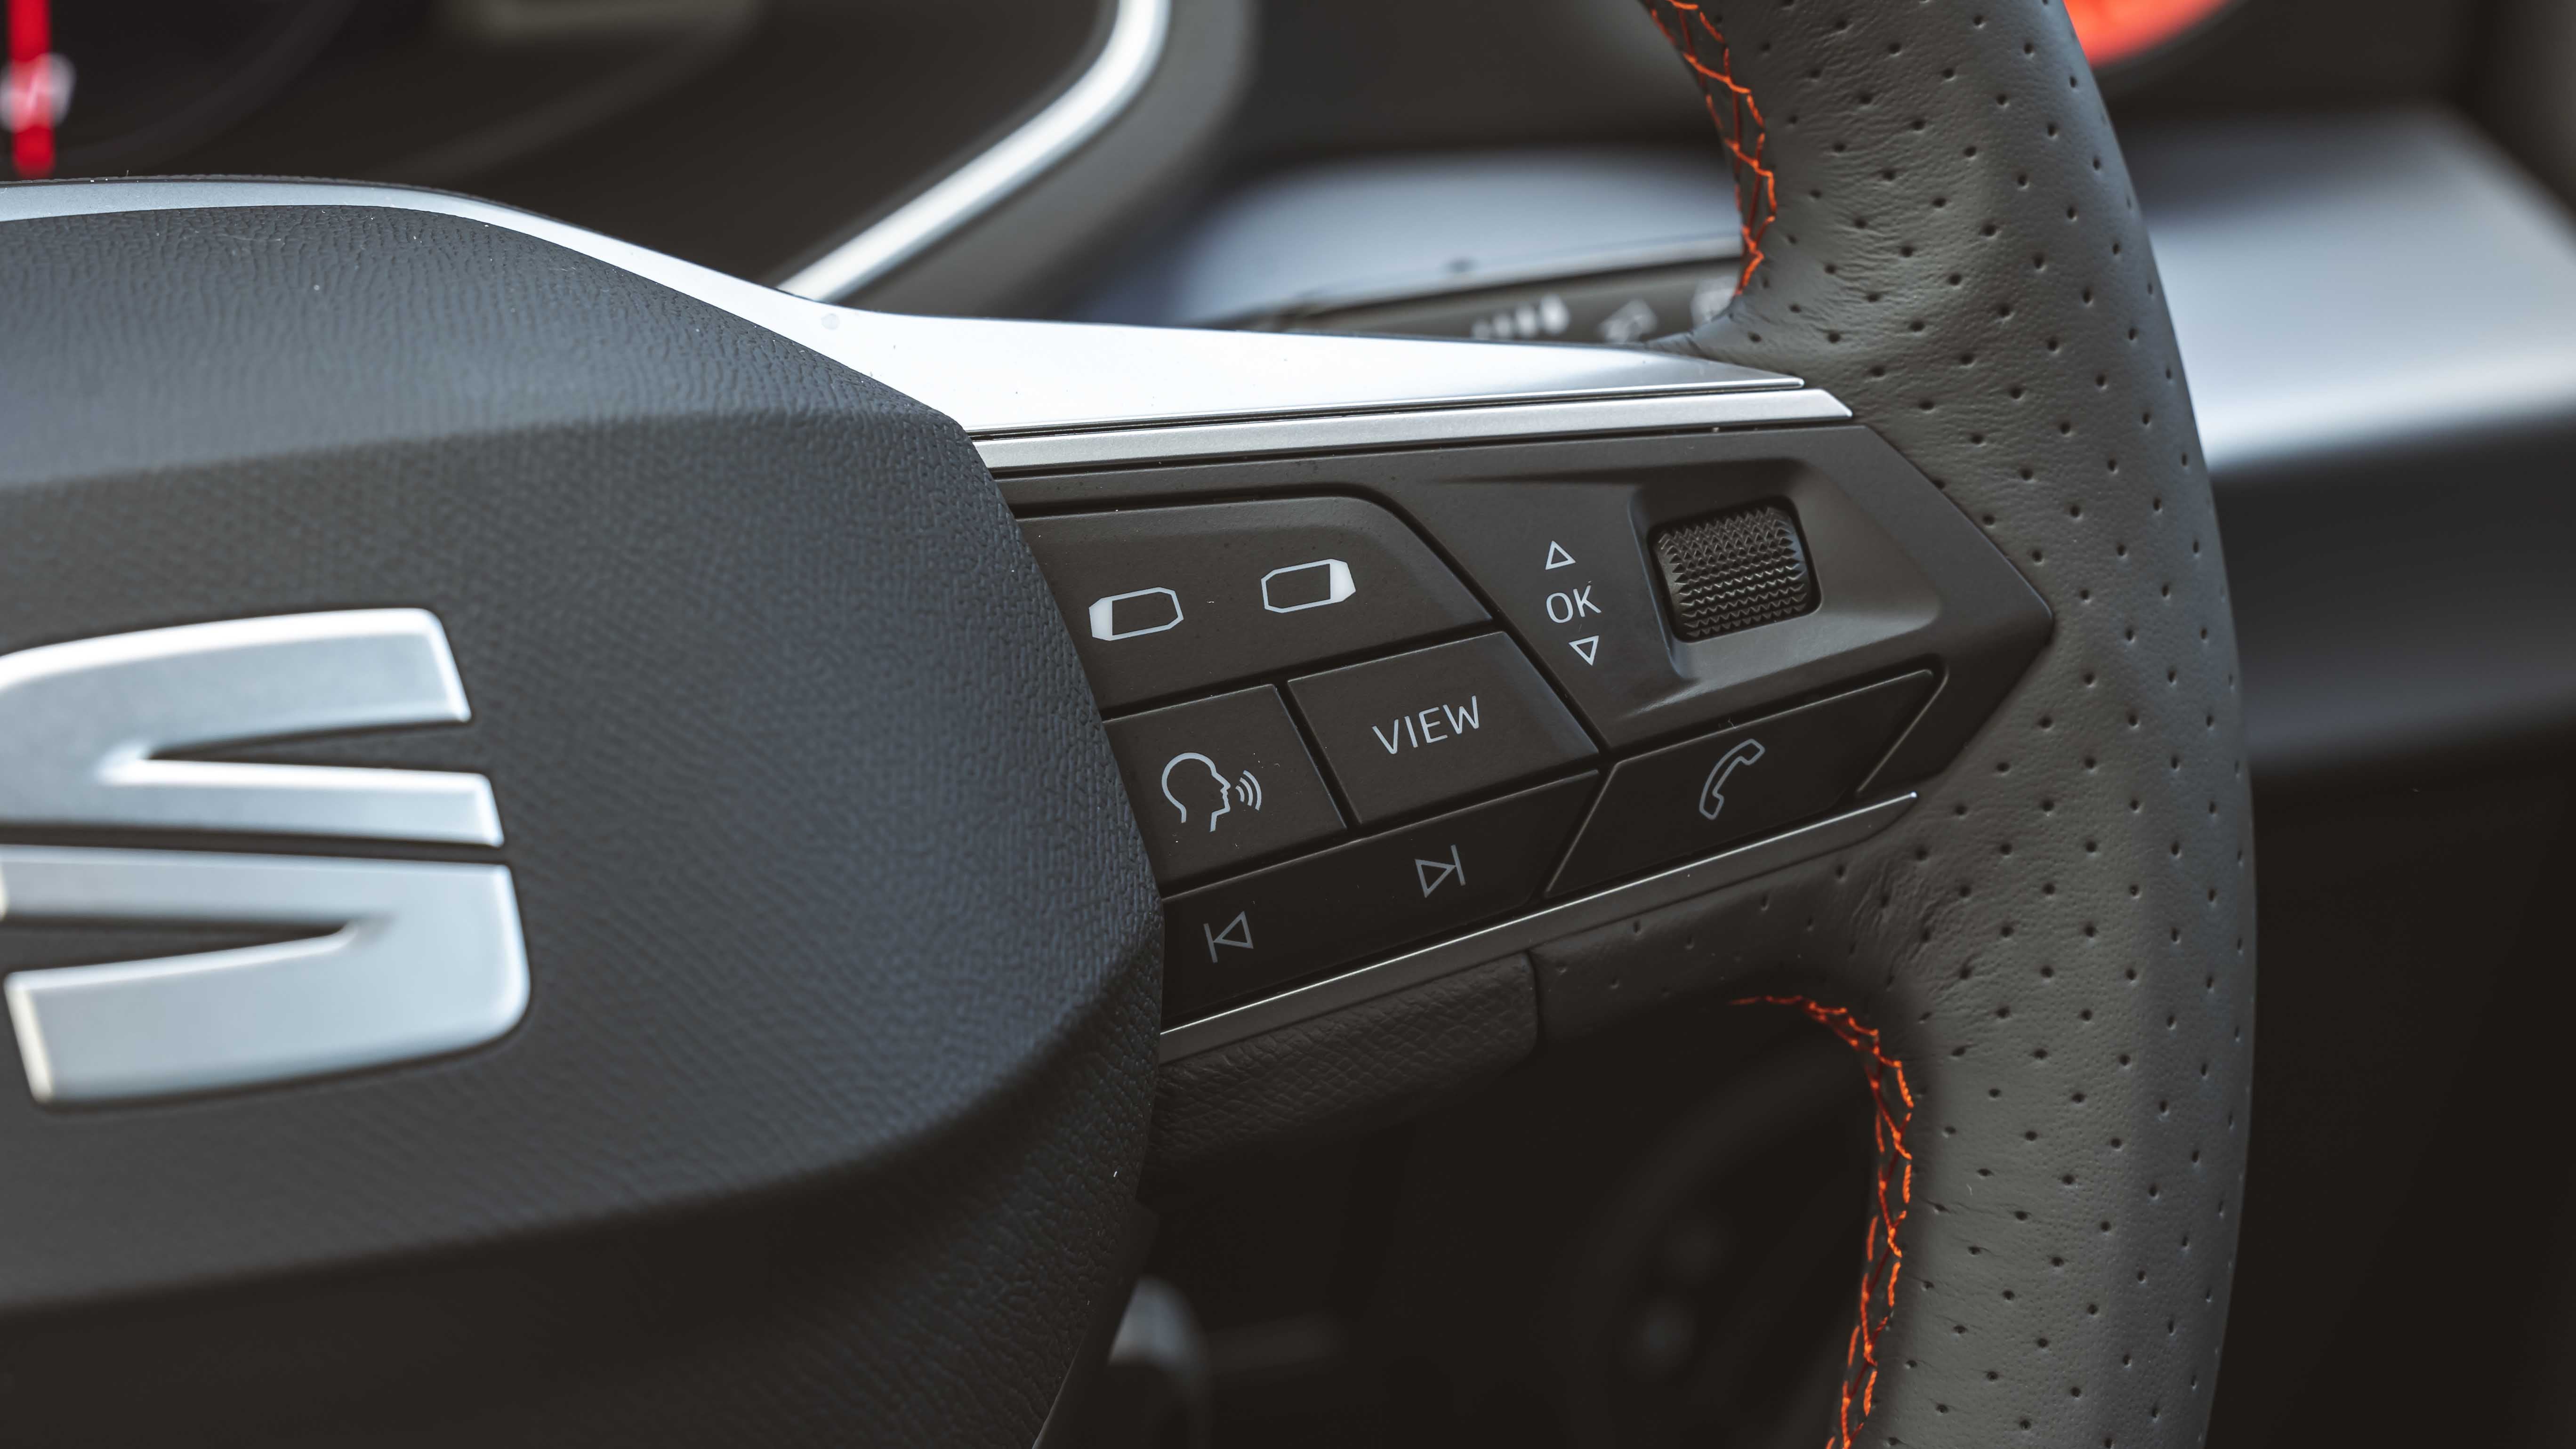 SEAT Ibiza steering wheel controls